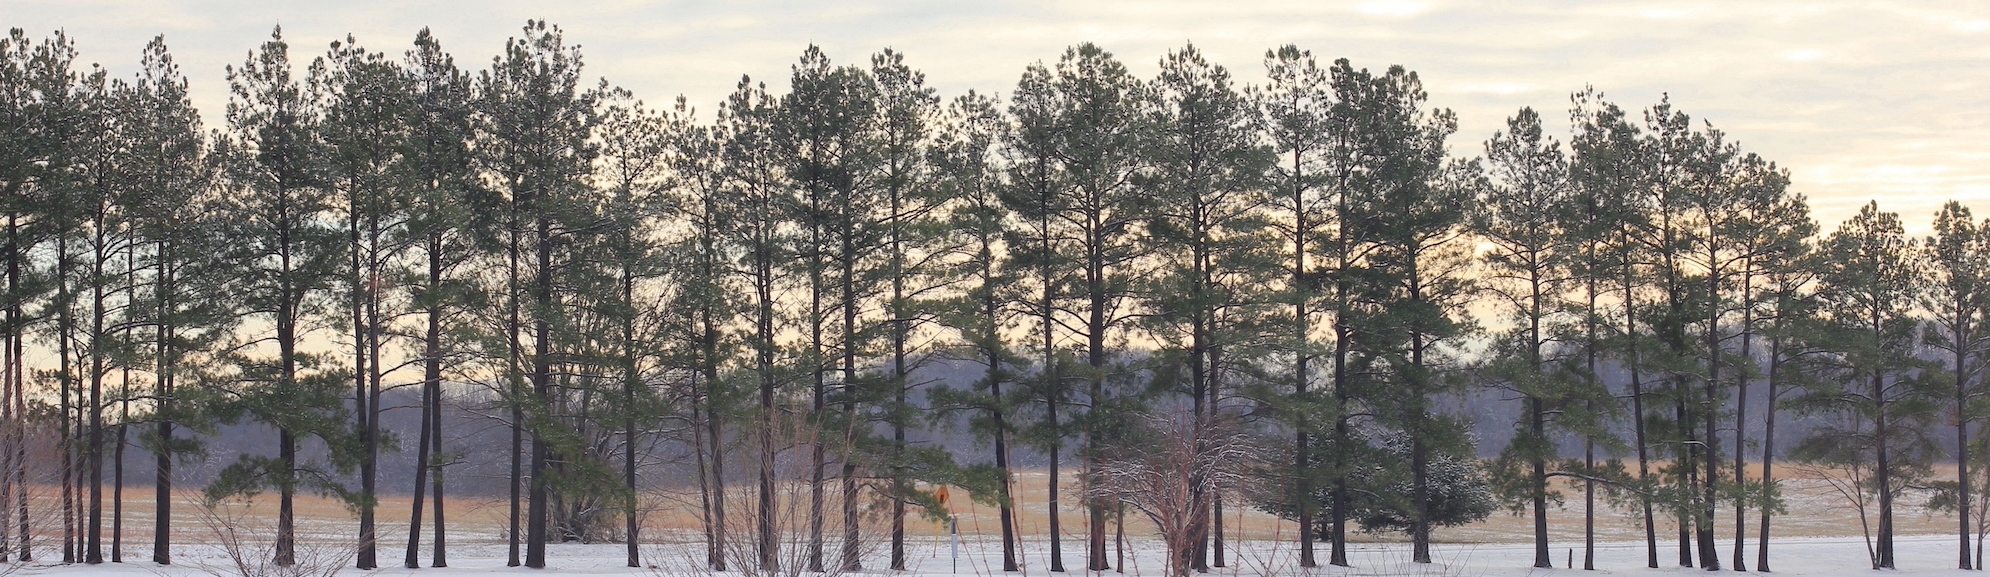 Row of pine trees on Timber Ridge School at sunrise or sunset